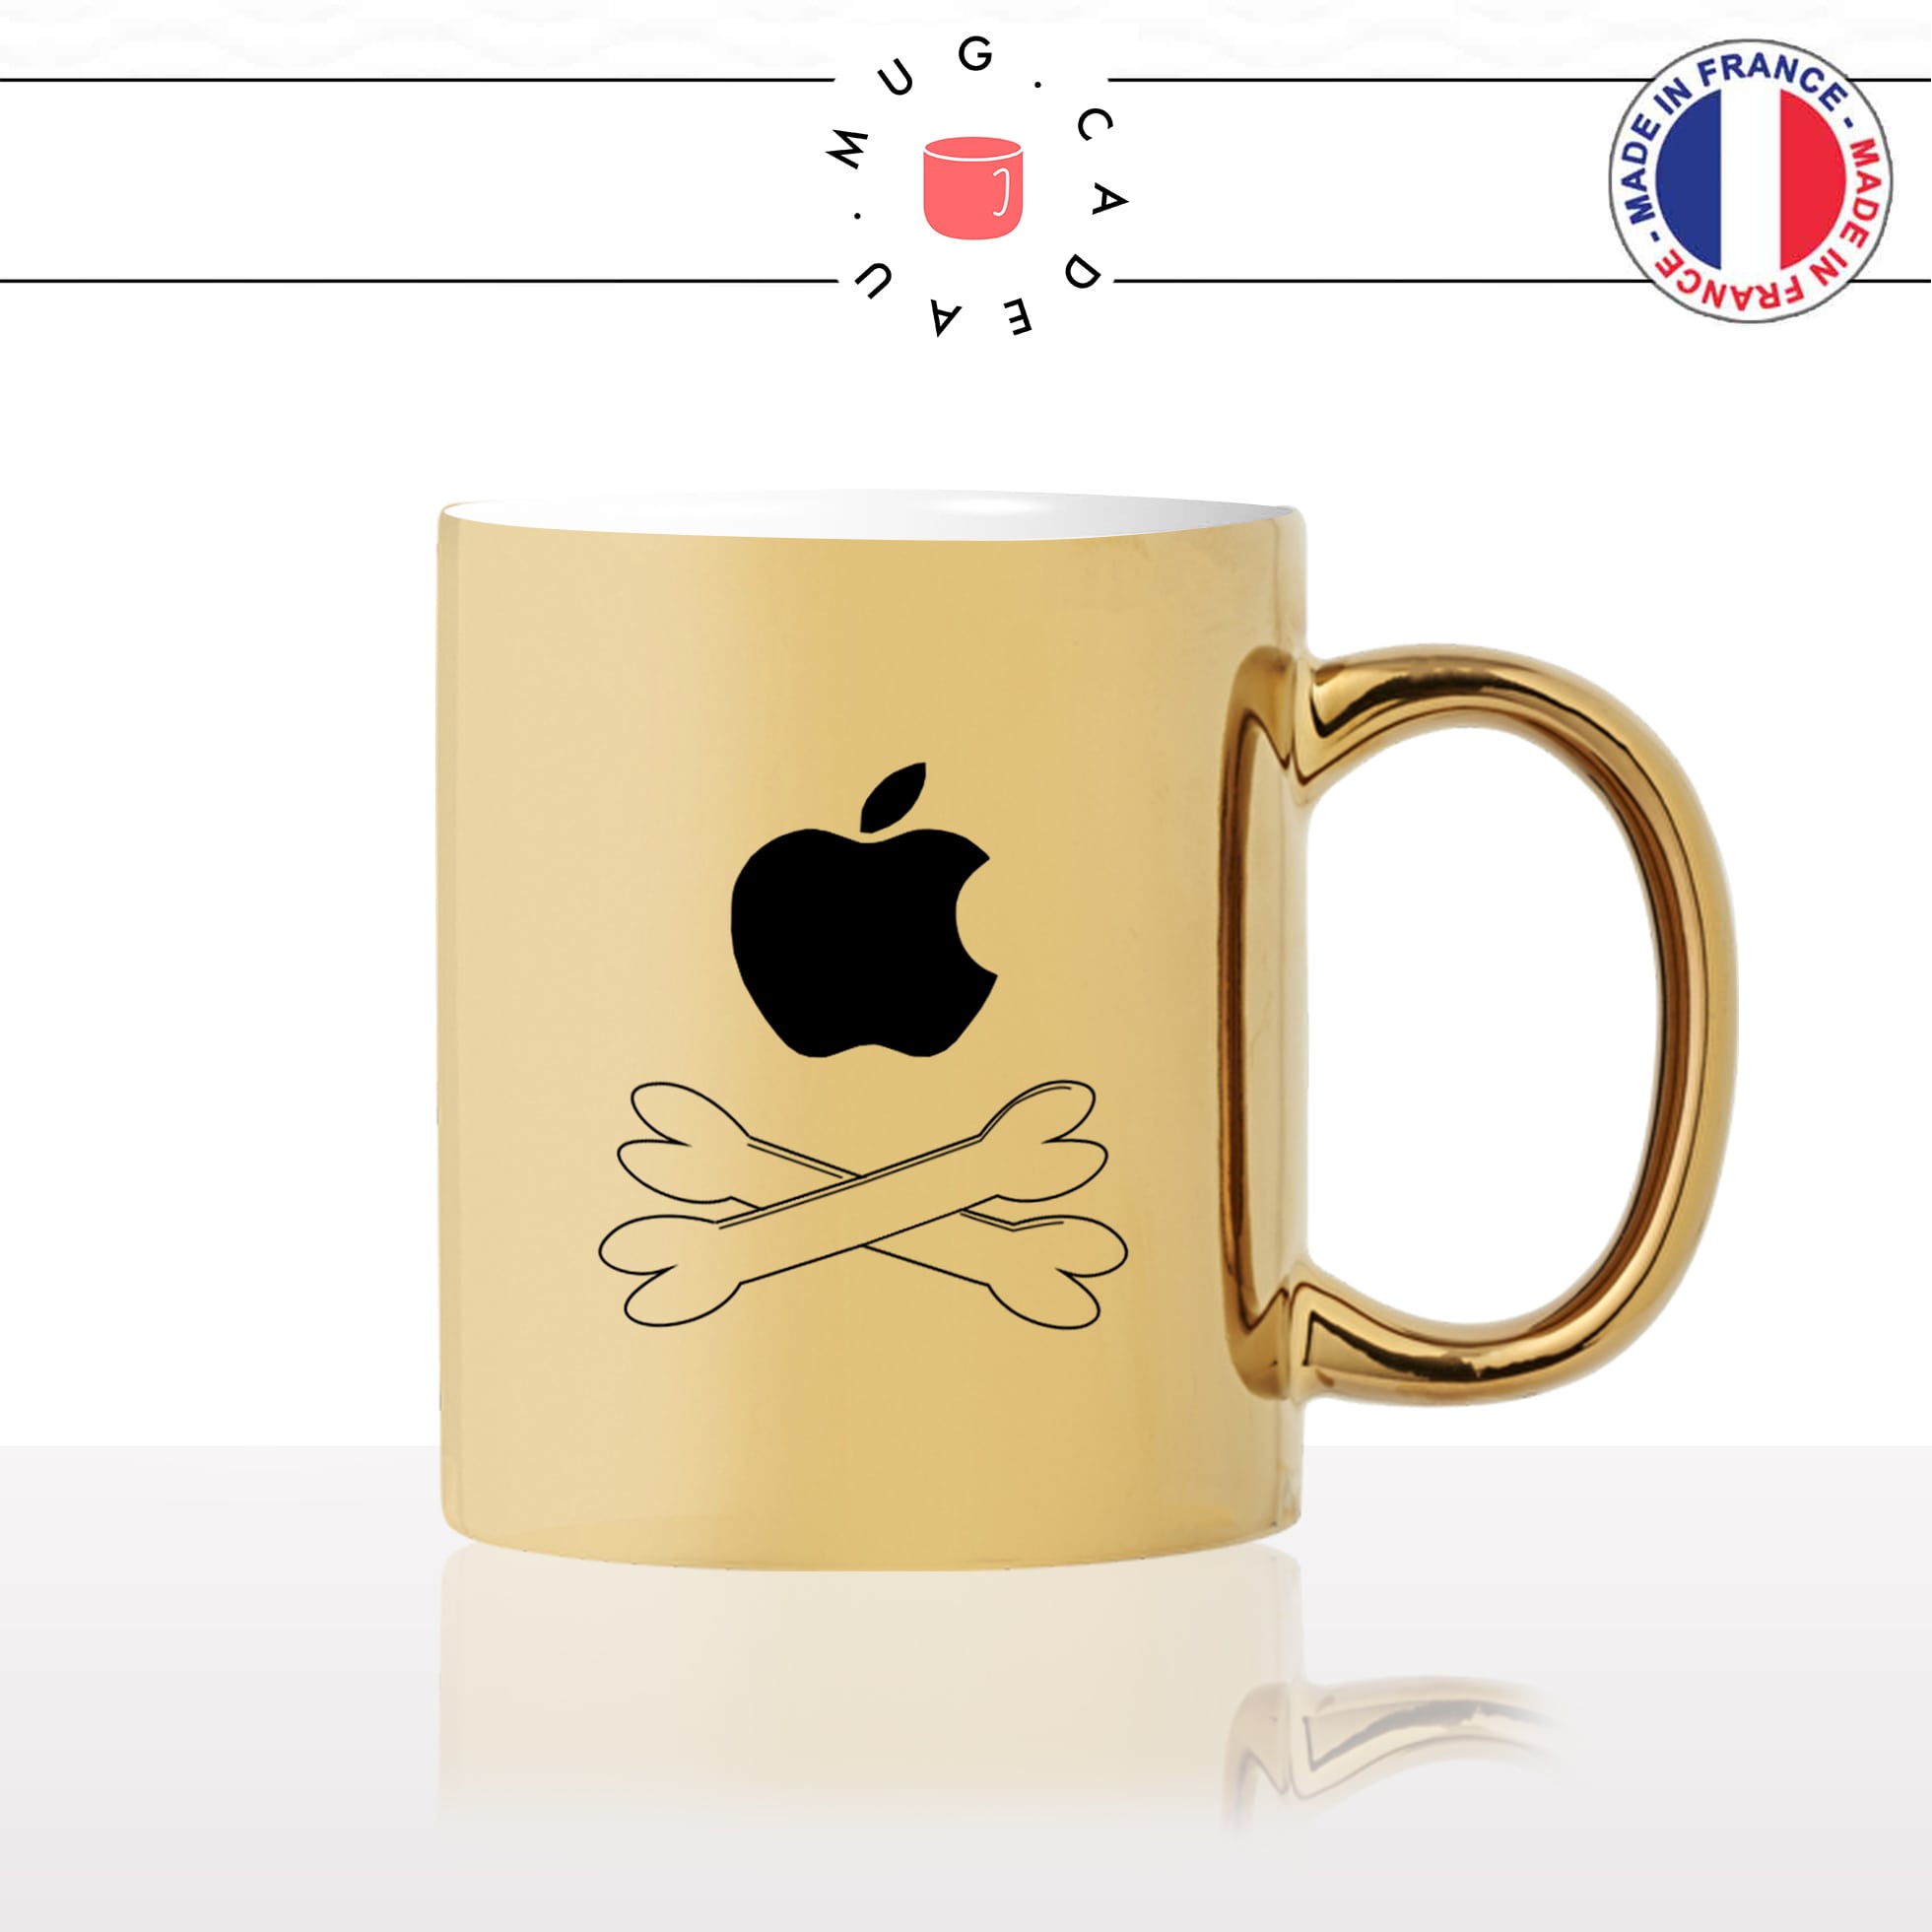 mug-tasse-or-gold-doré-geek-apple-drapeau-pirate-mondialisation-technologie-steeve-jobs-humour-fun-idée-cadeau-personnalisé-café-thé2-min